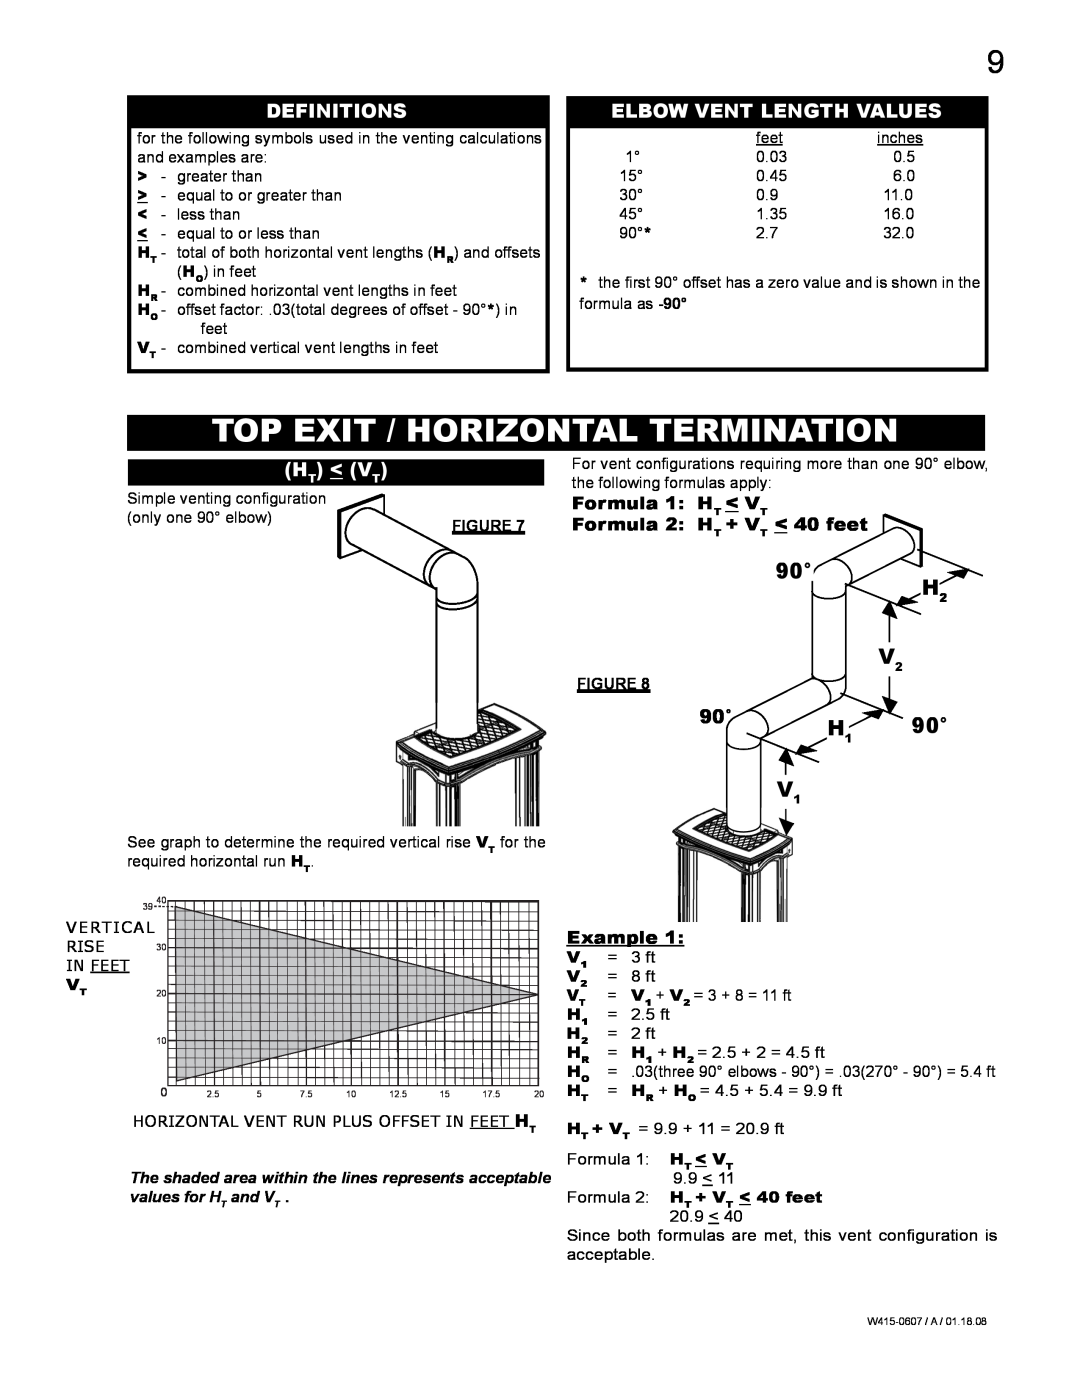 Napoleon Fireplaces GDS26N, GDS26P manual Top Exit / Horizontal Termination, Definitions, Elbow Vent Length Values, Ht Vt 